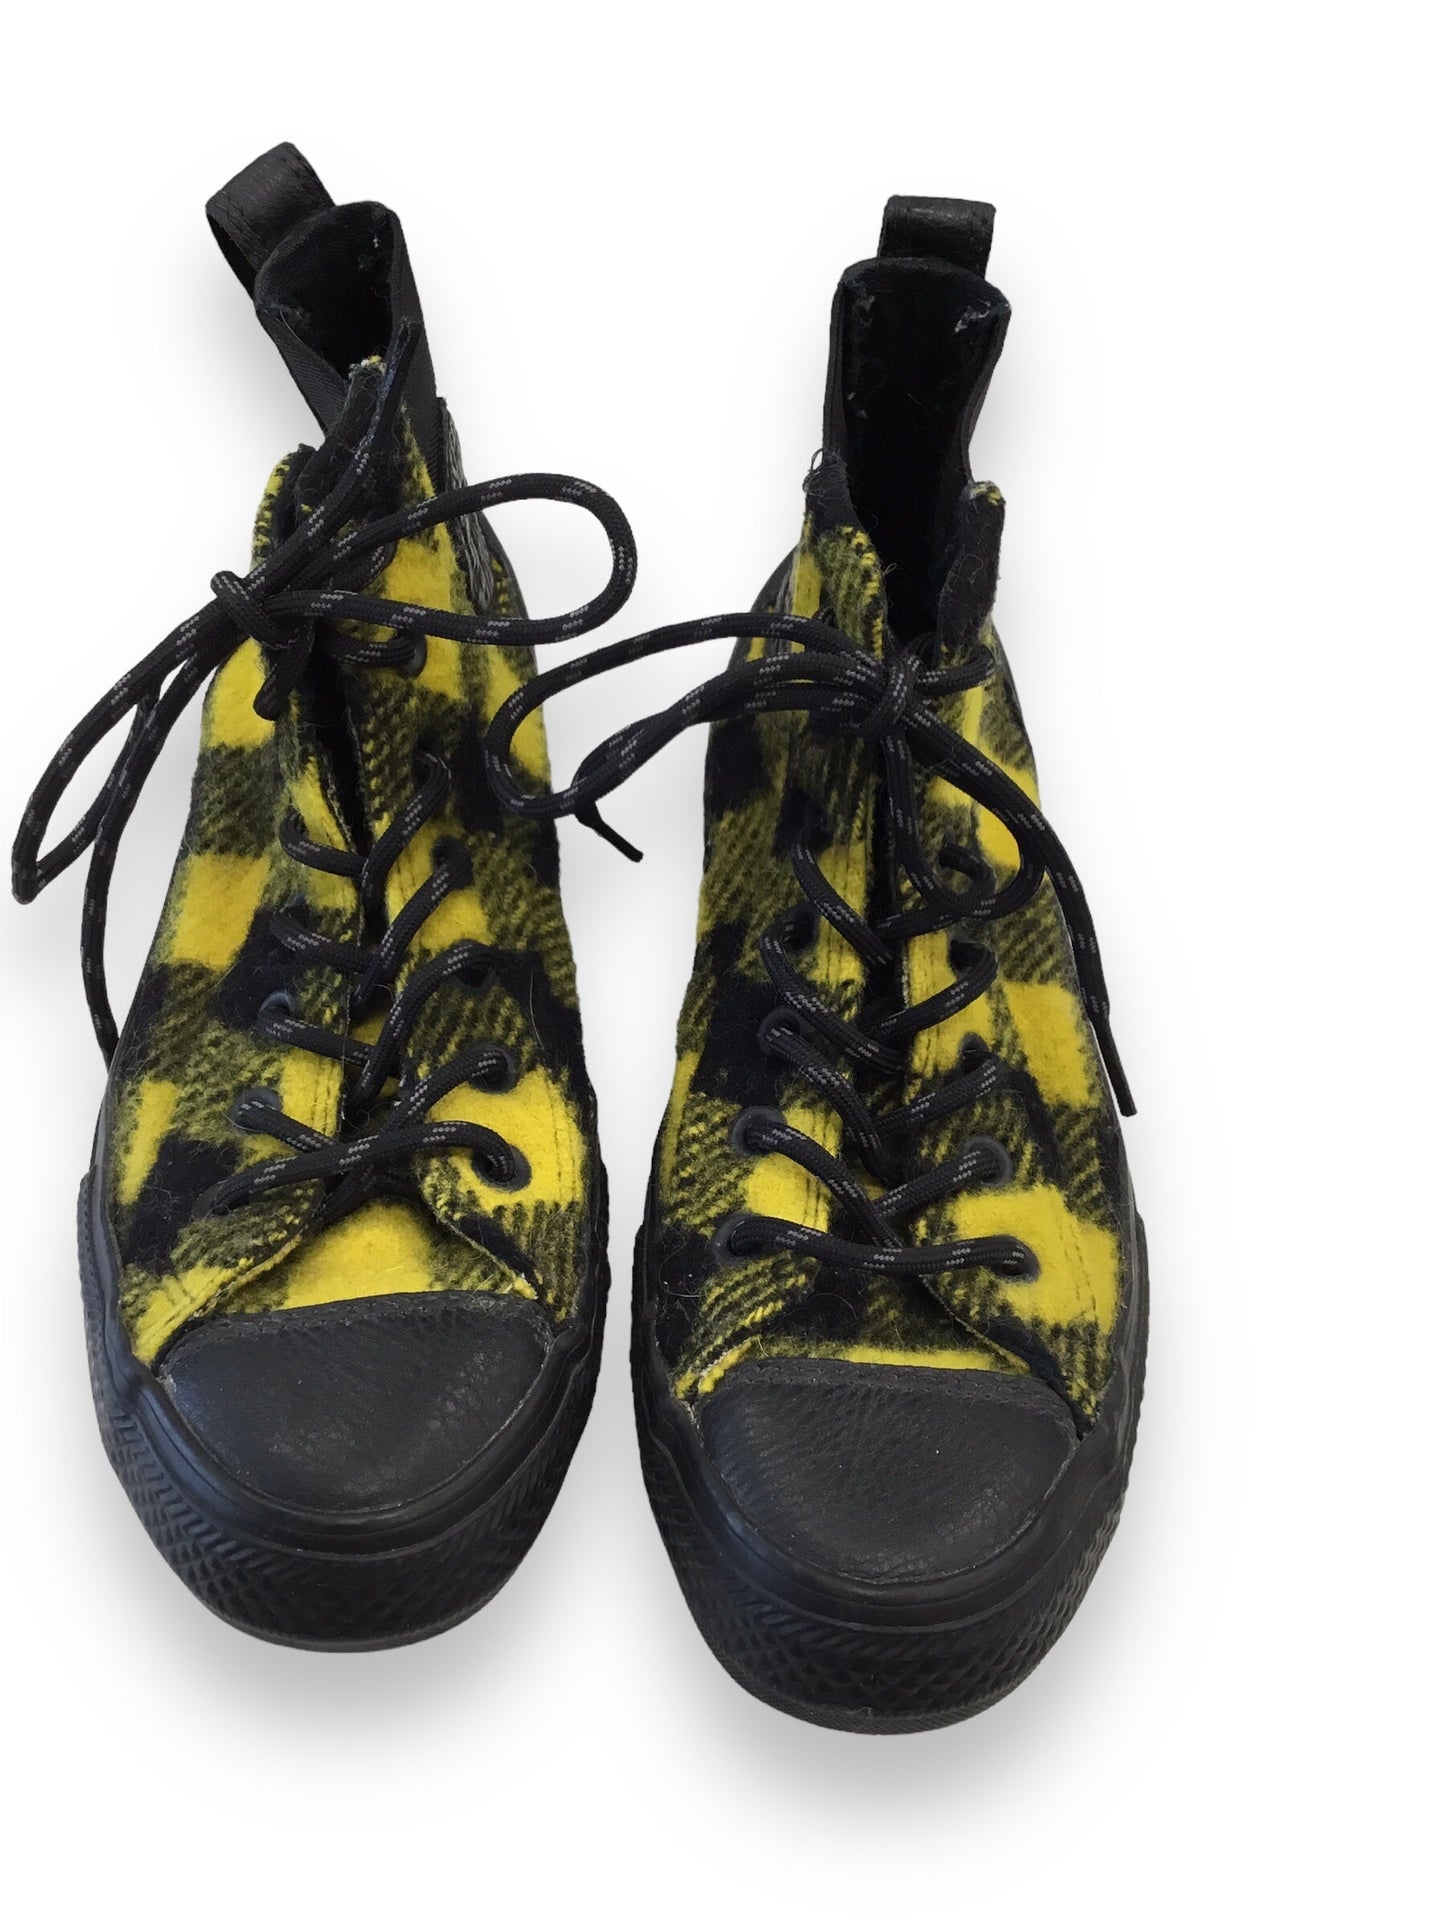 Plaid Pattern Shoes Athletic Converse, Size 7